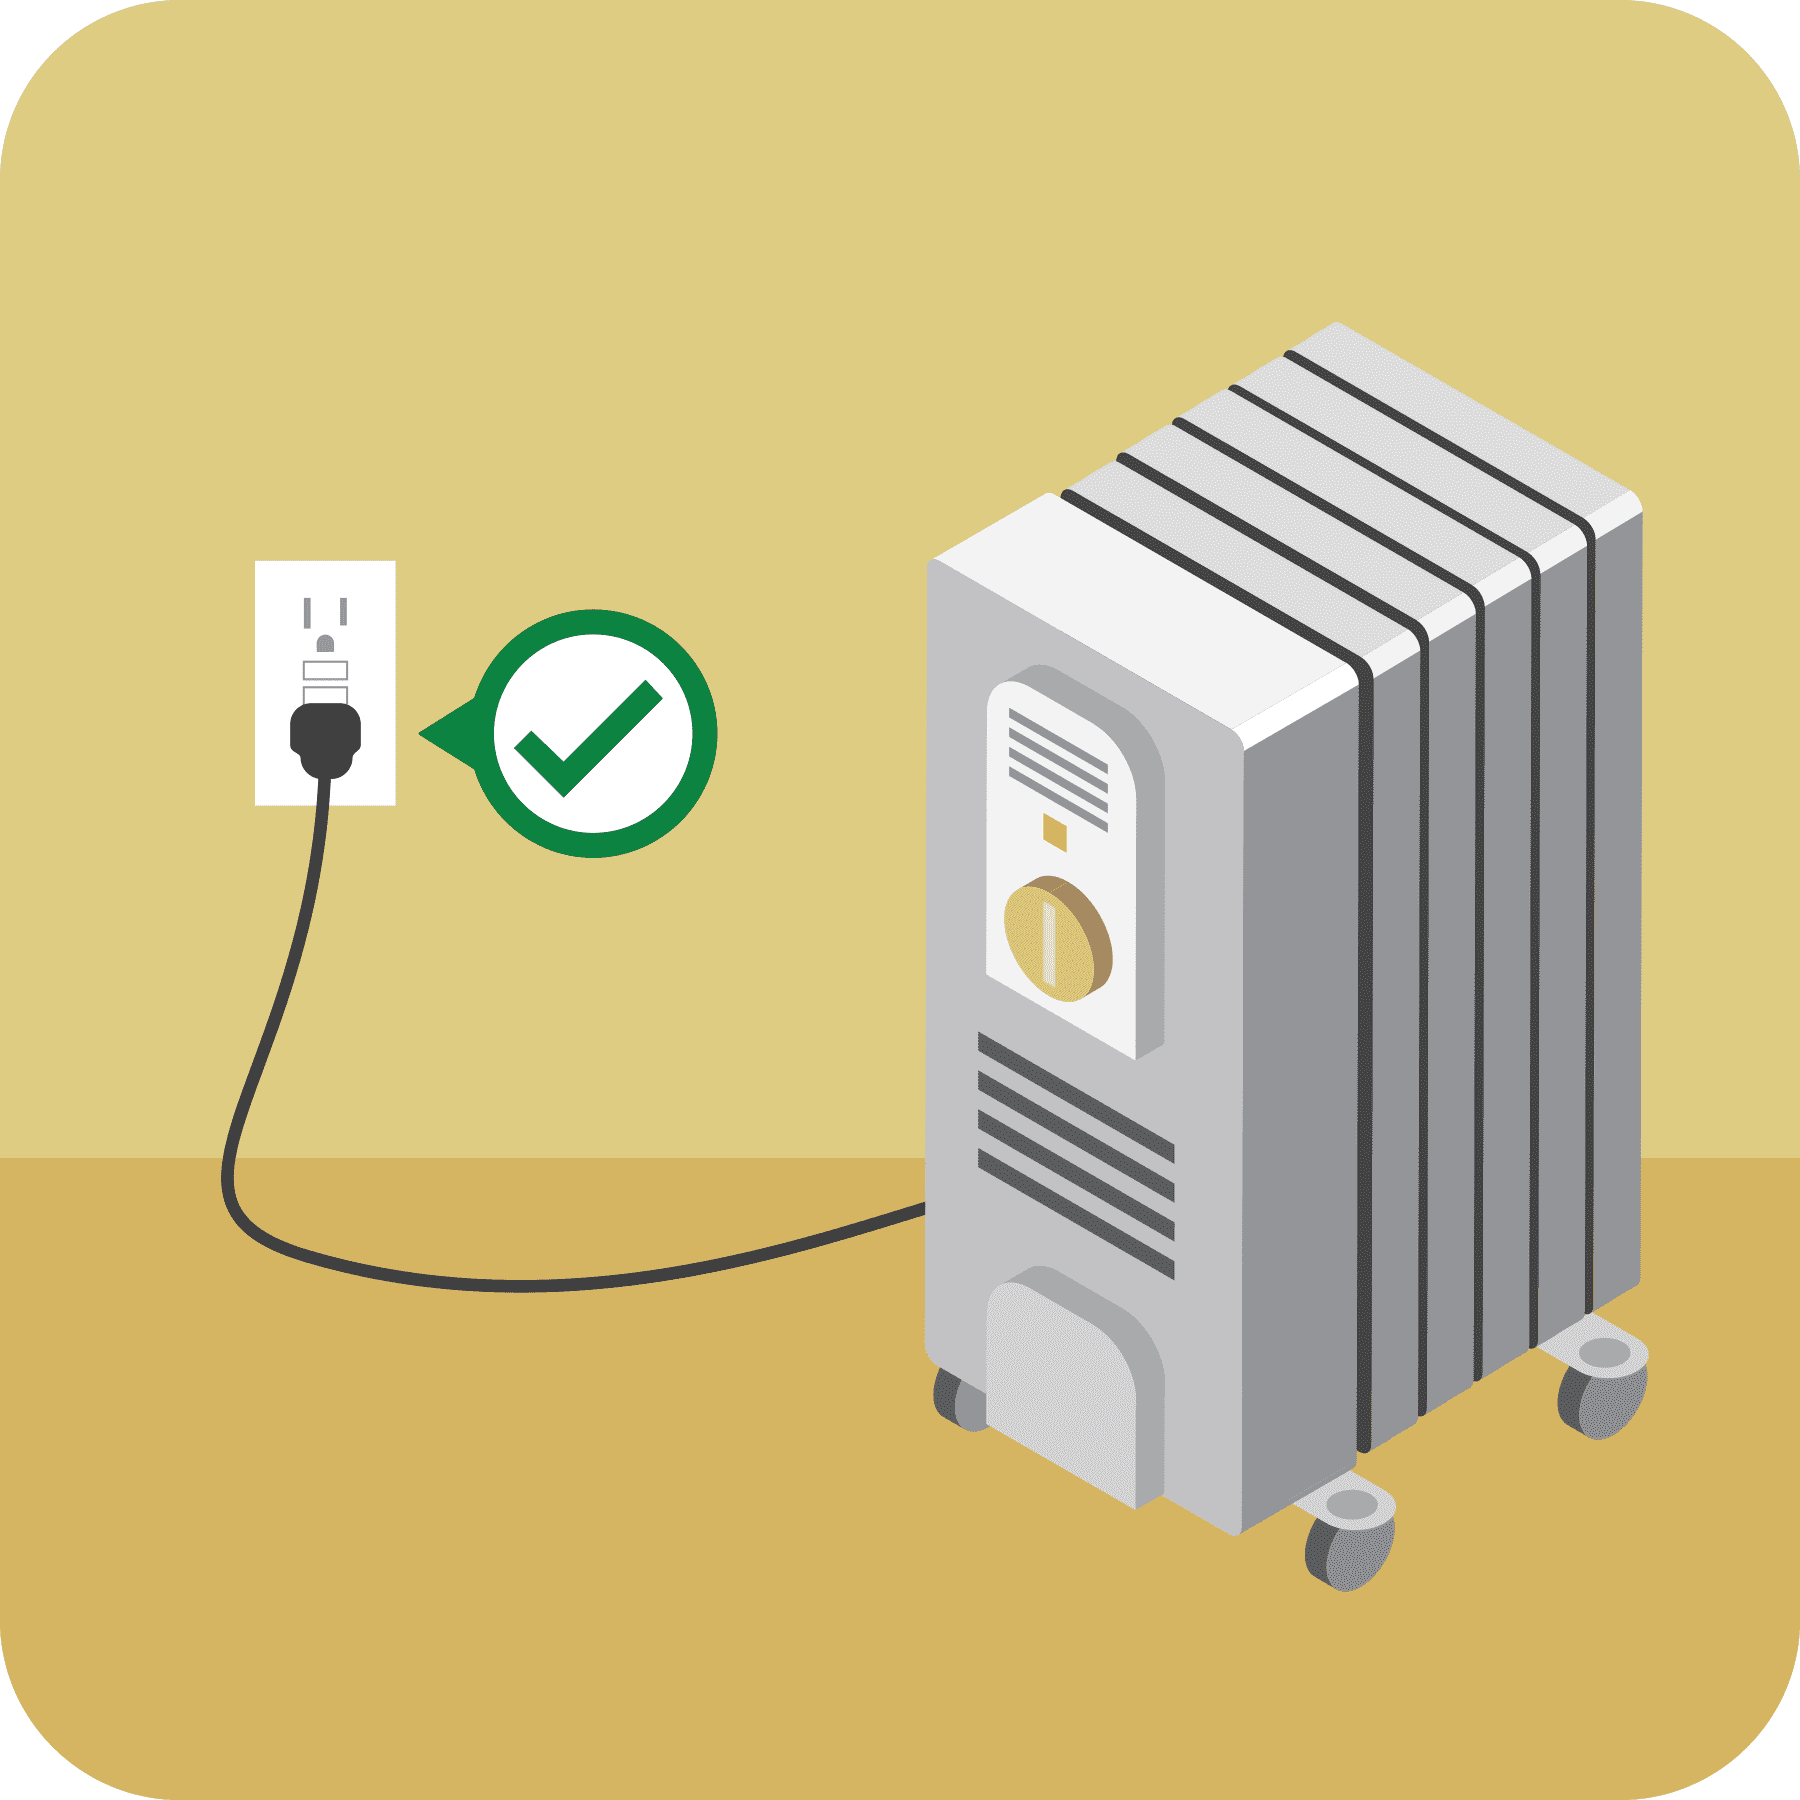 correctly plug in appliances